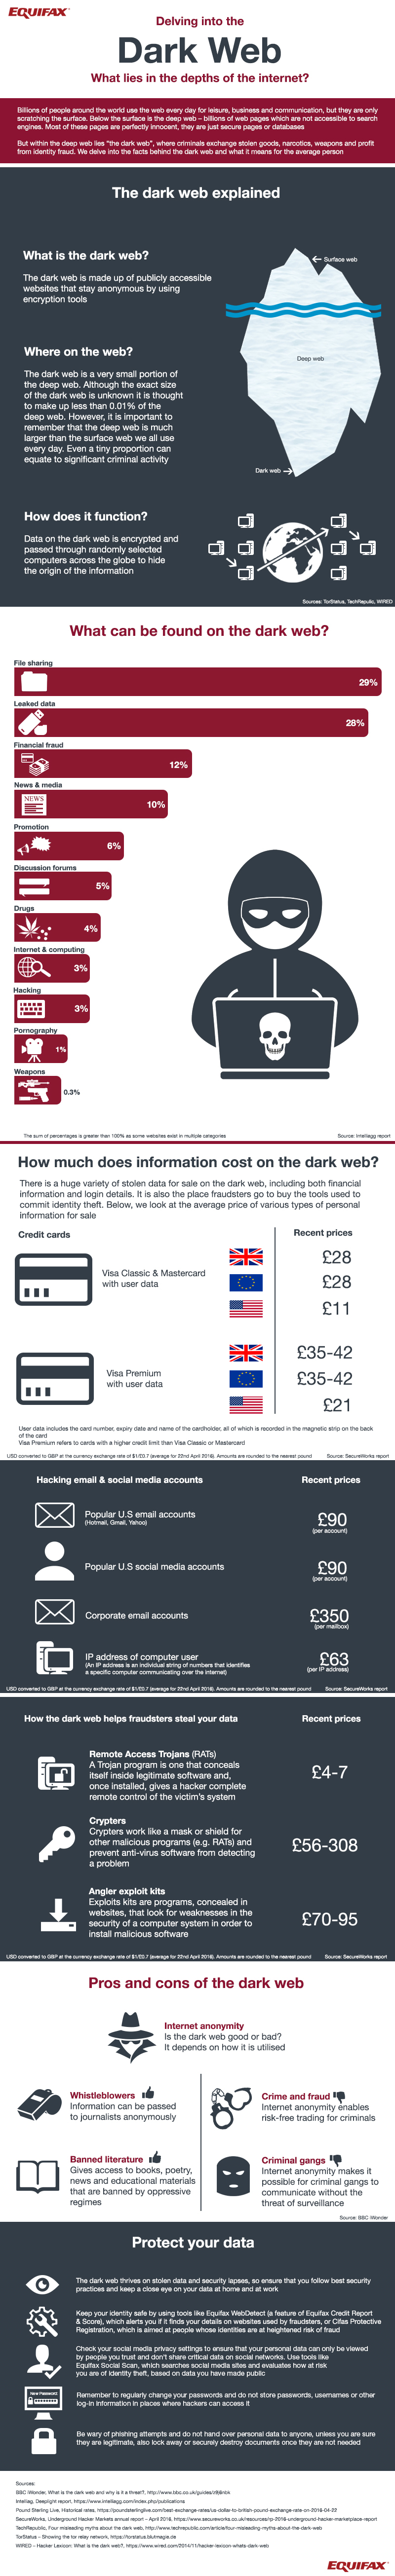 DarkWeb_infographic.png